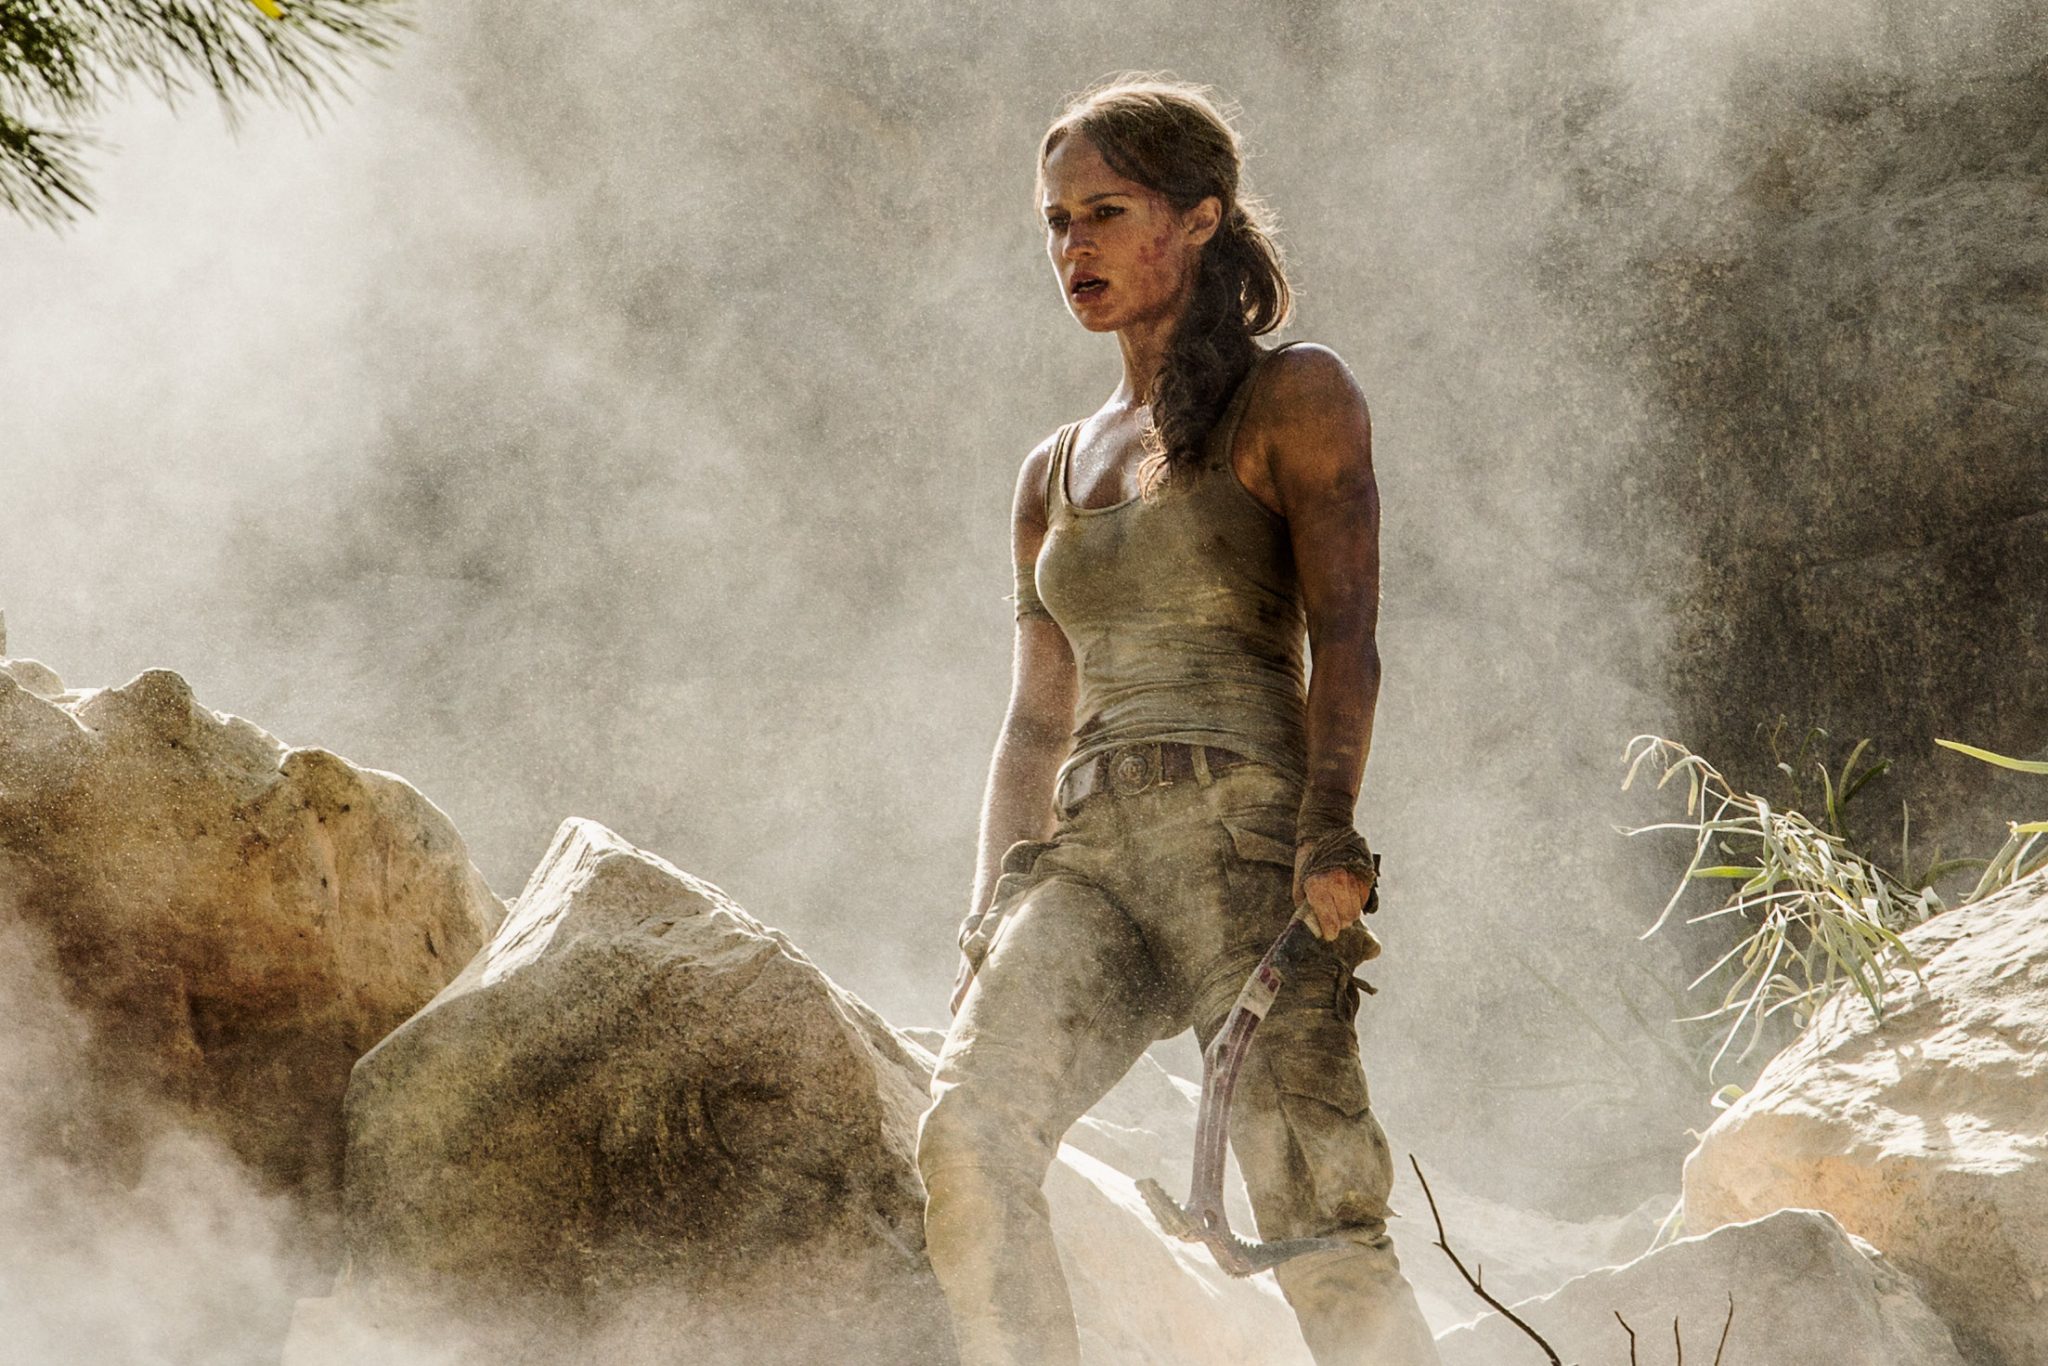 Lara im Dschungel in "Tomb Raider" ©2018 Warner Bros. Entertainment Inc and Metro-Goldwyn-Mayer Pictures Inc.